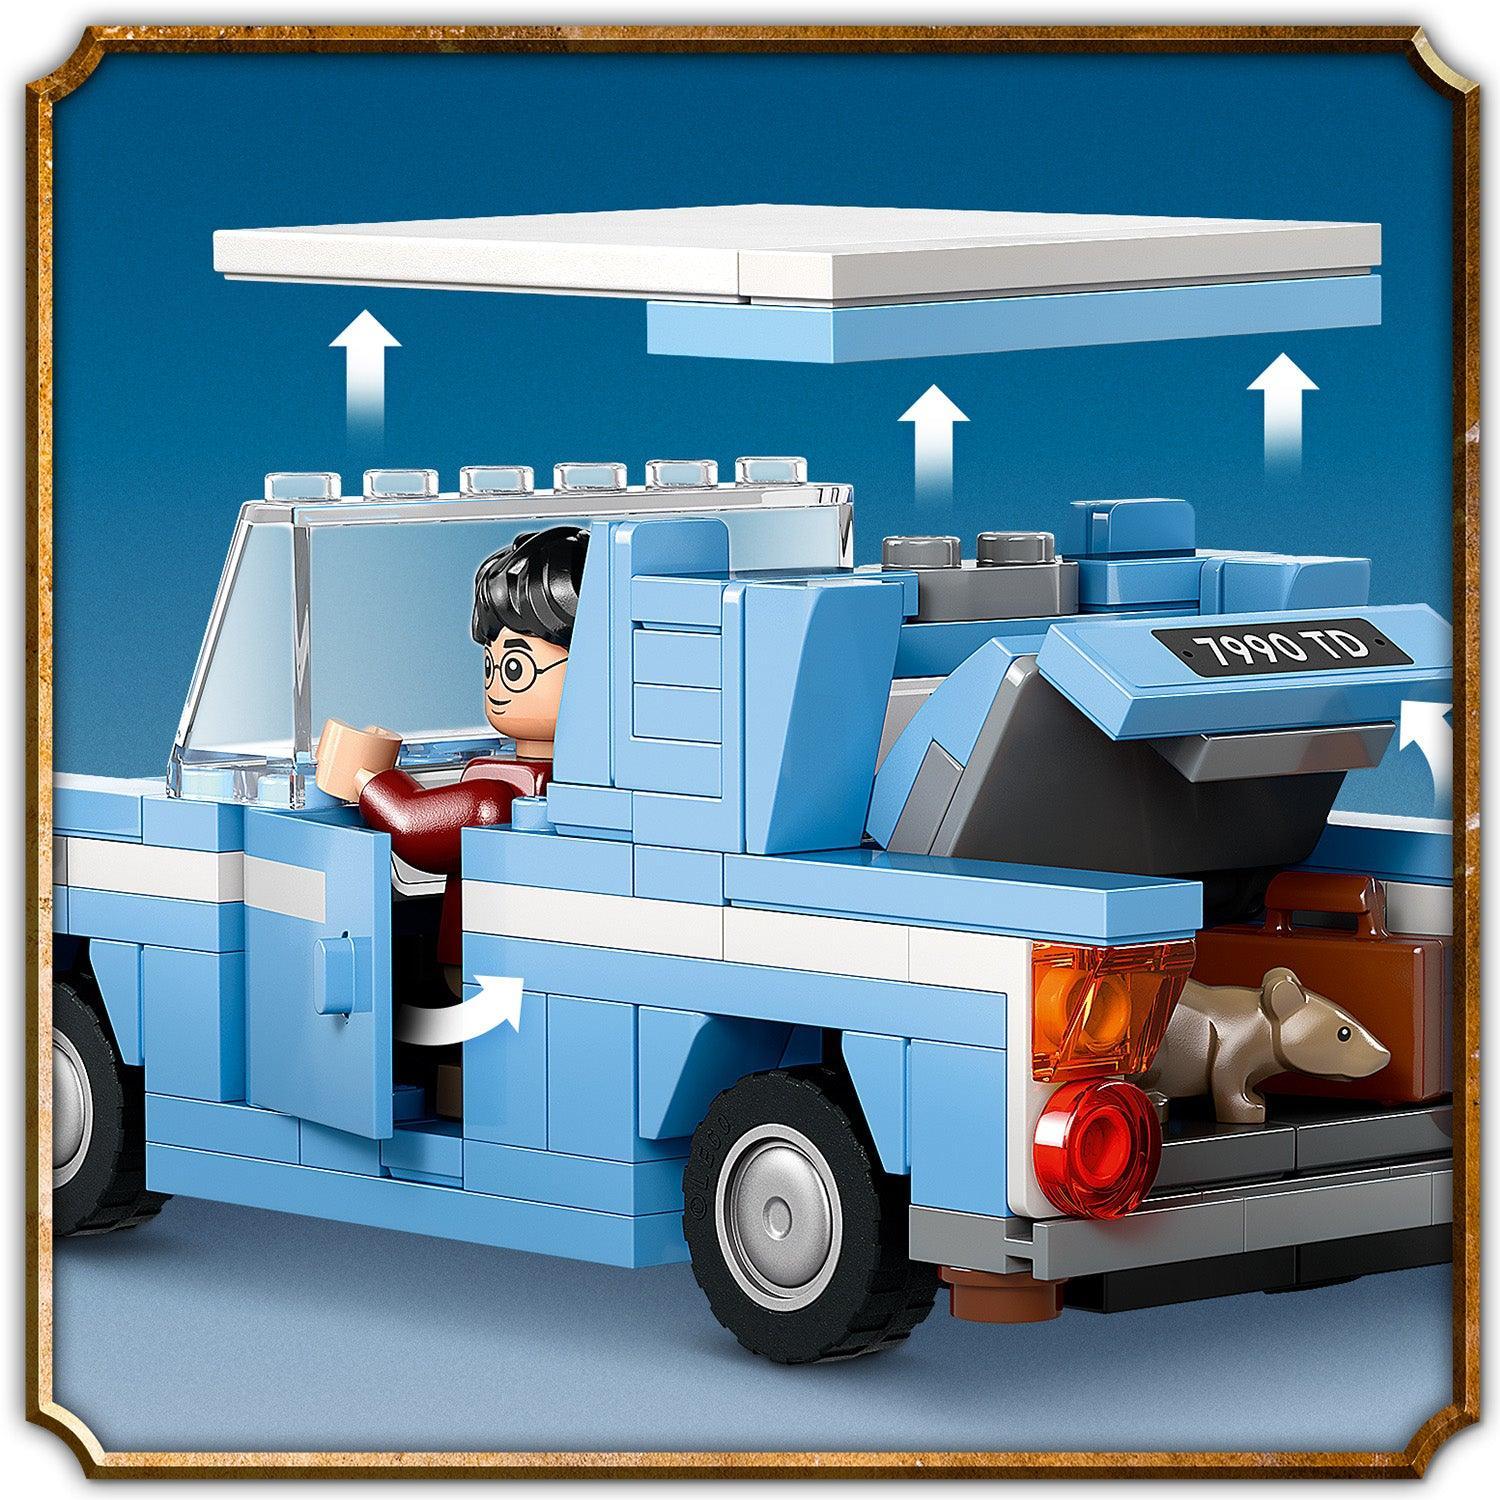 LEGO Vliegende Ford Anglia 76424 Harry Potter LEGO HARRY POTTER @ 2TTOYS LEGO €. 12.99